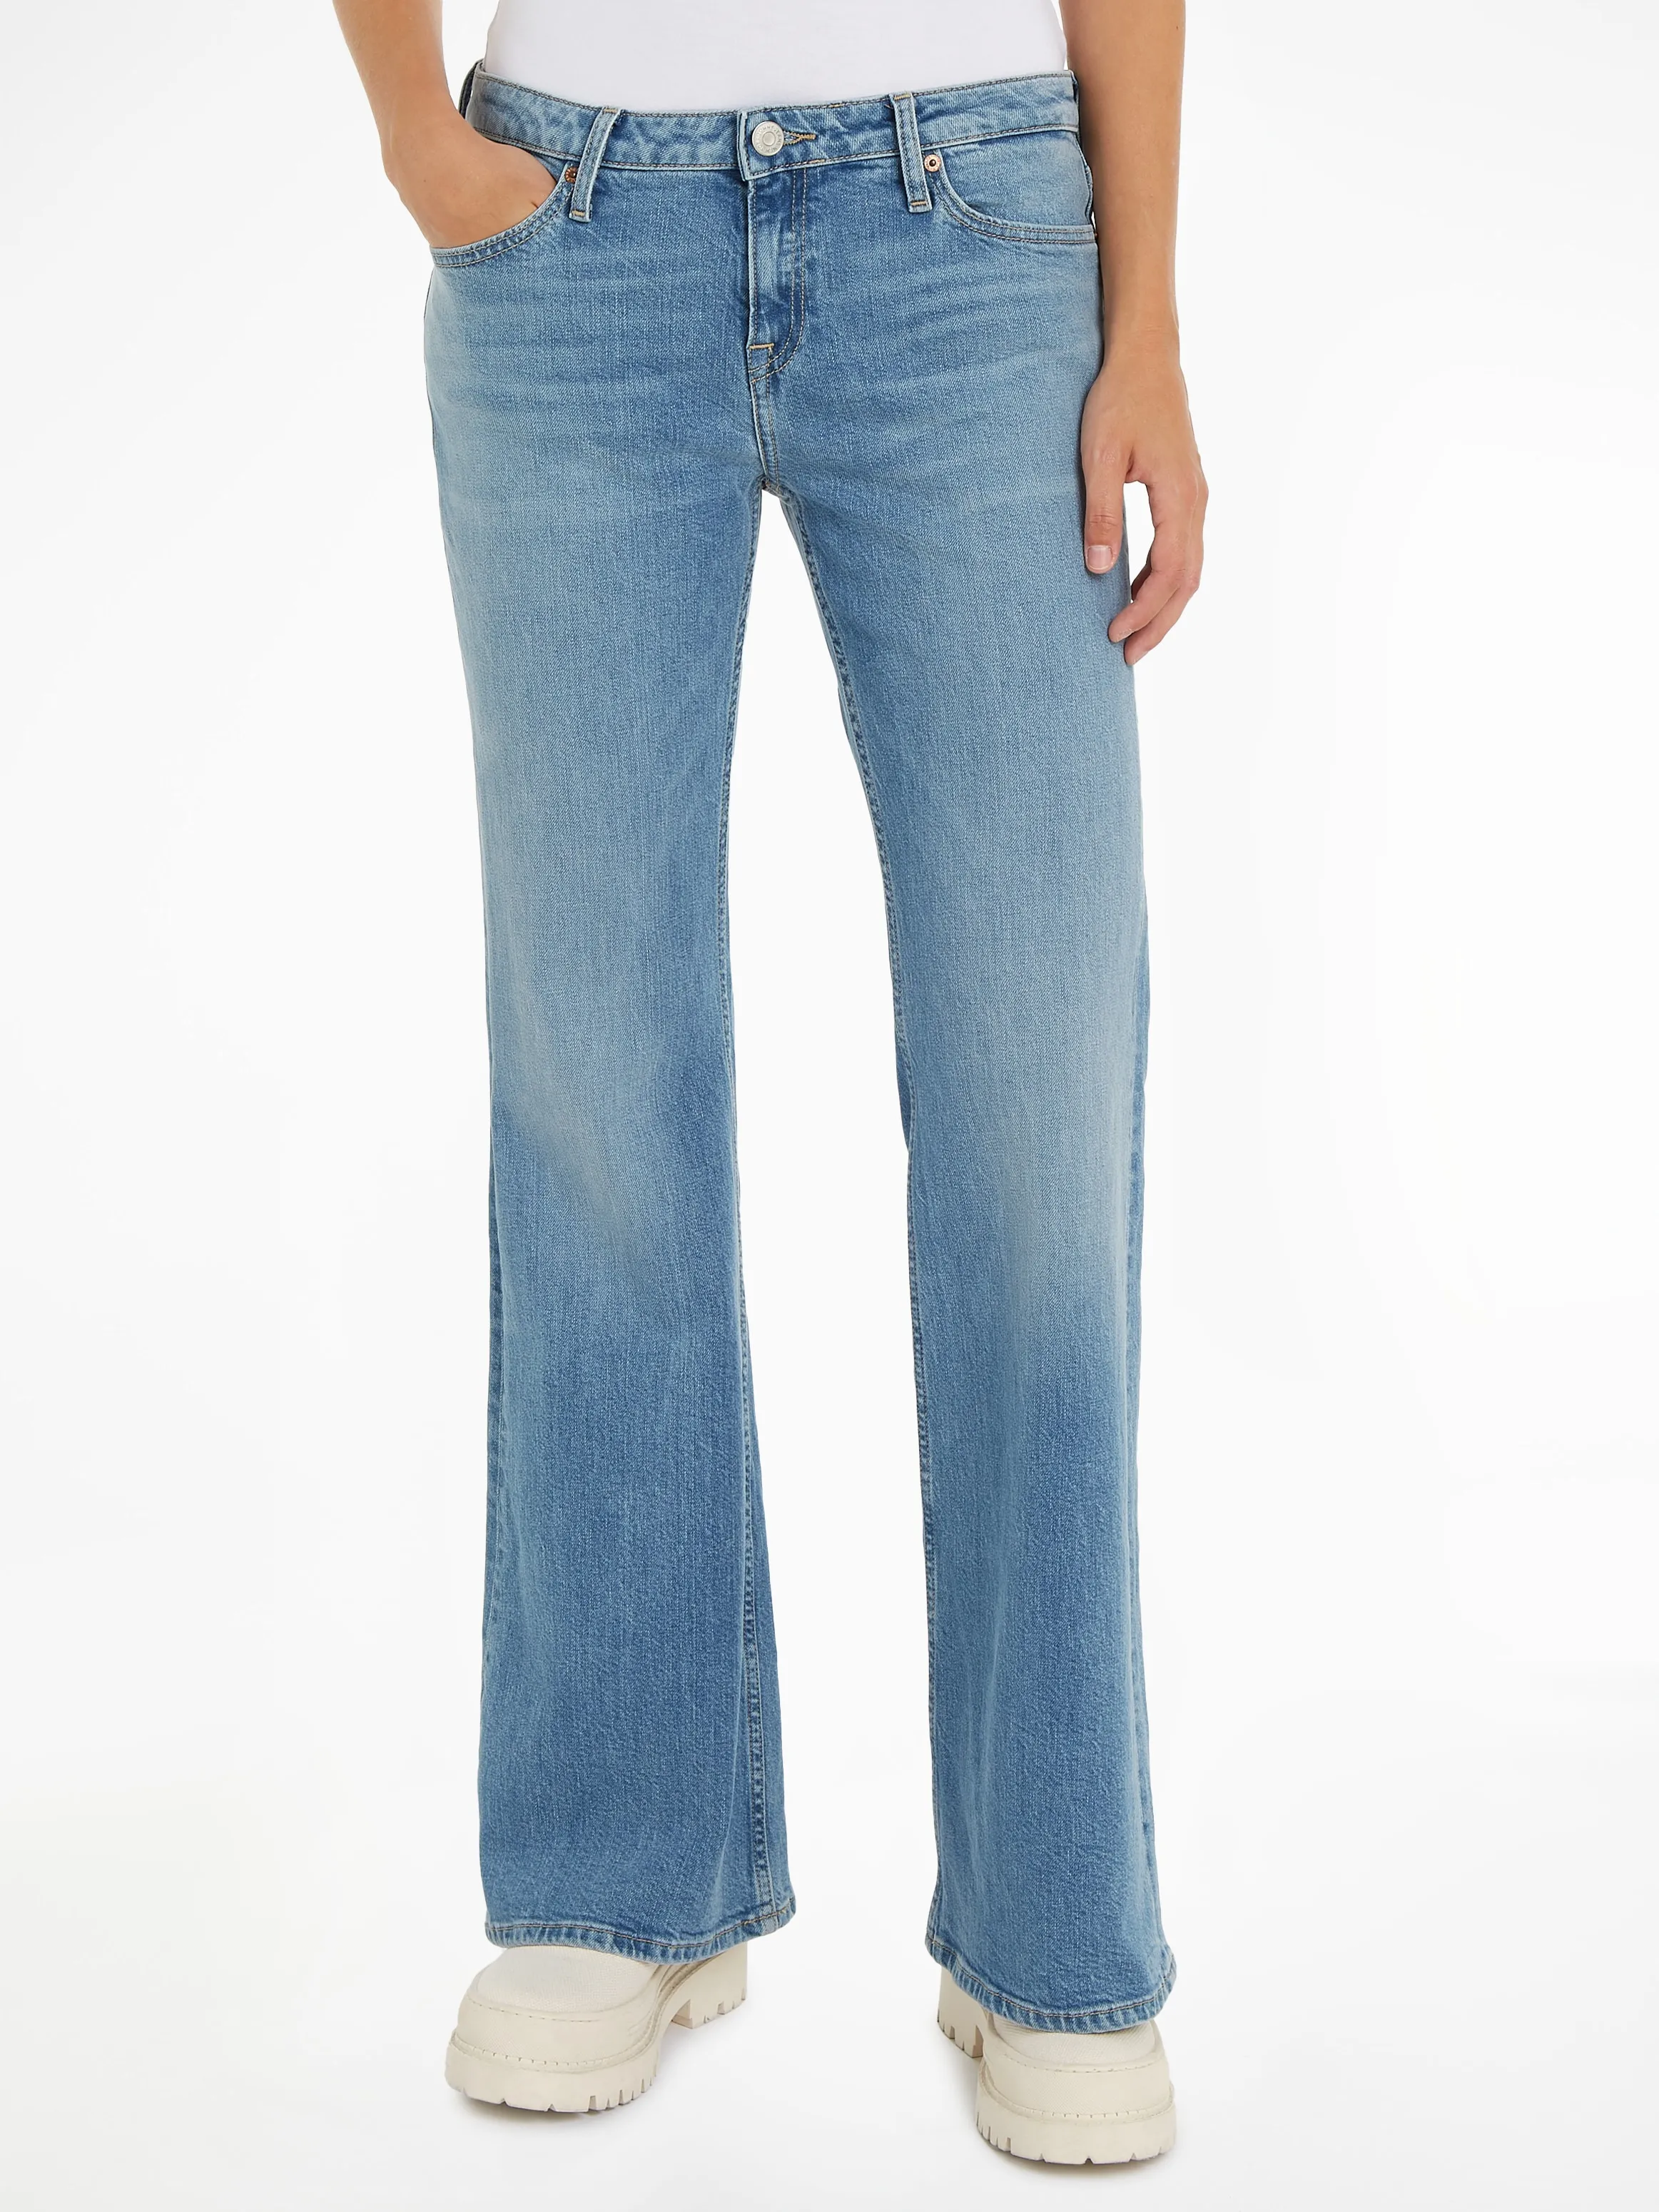 Bequeme Jeans TOMMY JEANS Gr. 31, Länge 30, blau (denim medium) Damen Jeans Bootcut mit Ledermarkenlabel